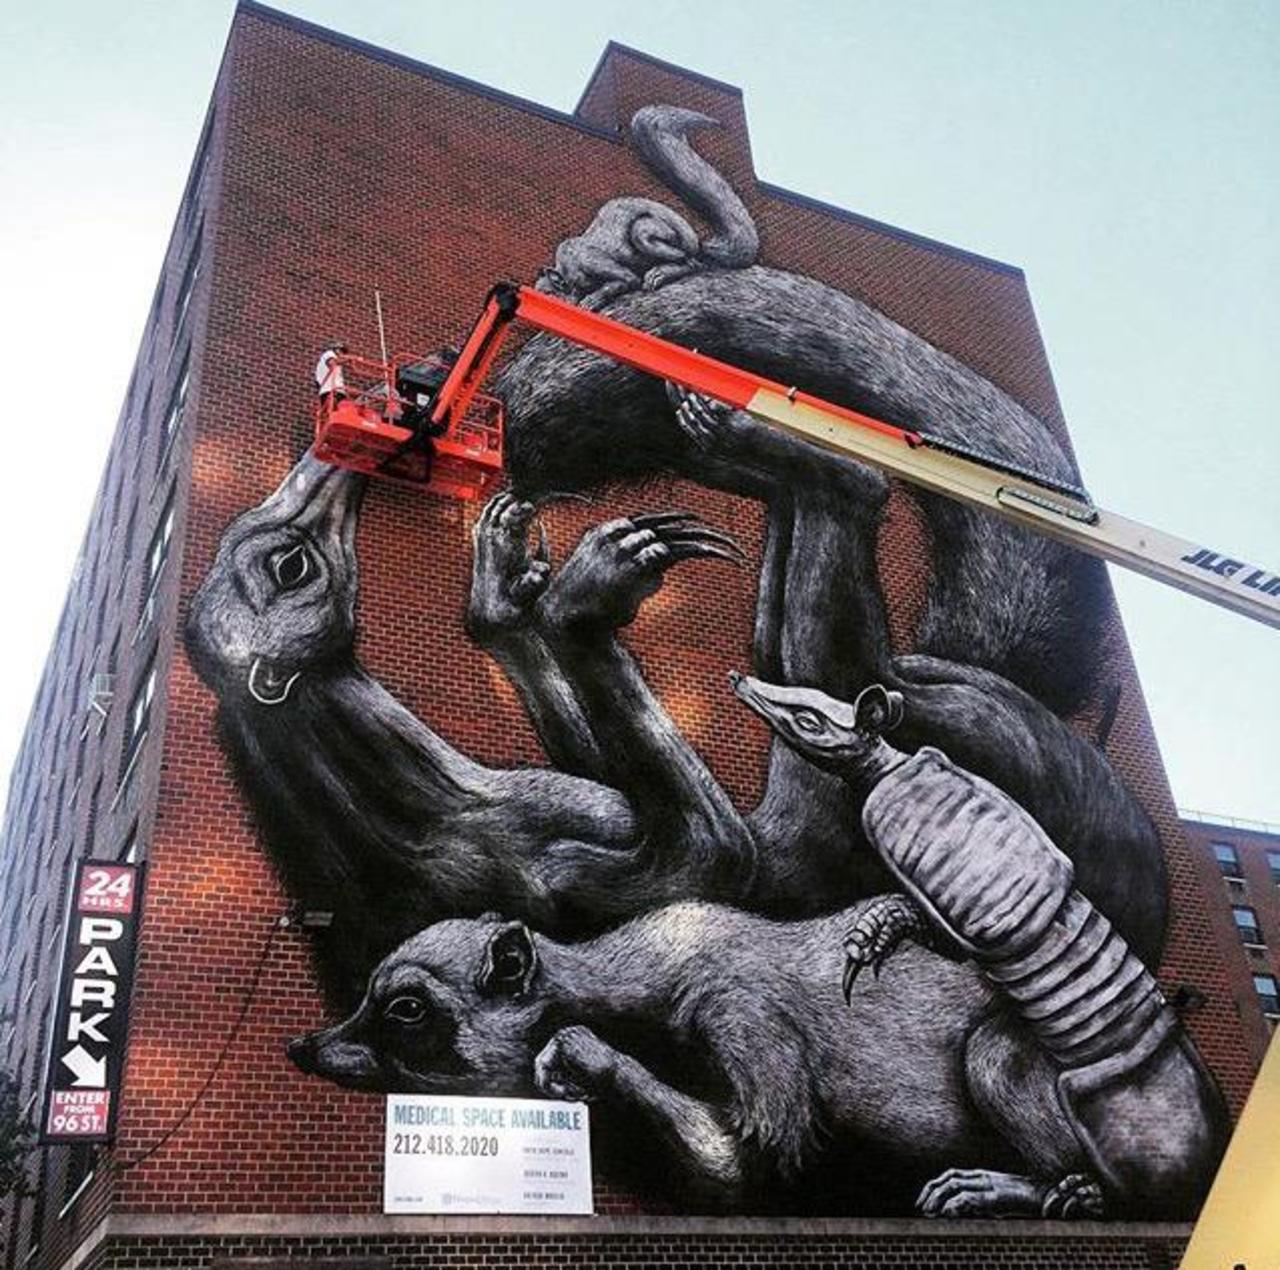 Street Art in progress by ROA in NYC

#art #graffiti #mural #streetart http://t.co/iv7wdurt1i